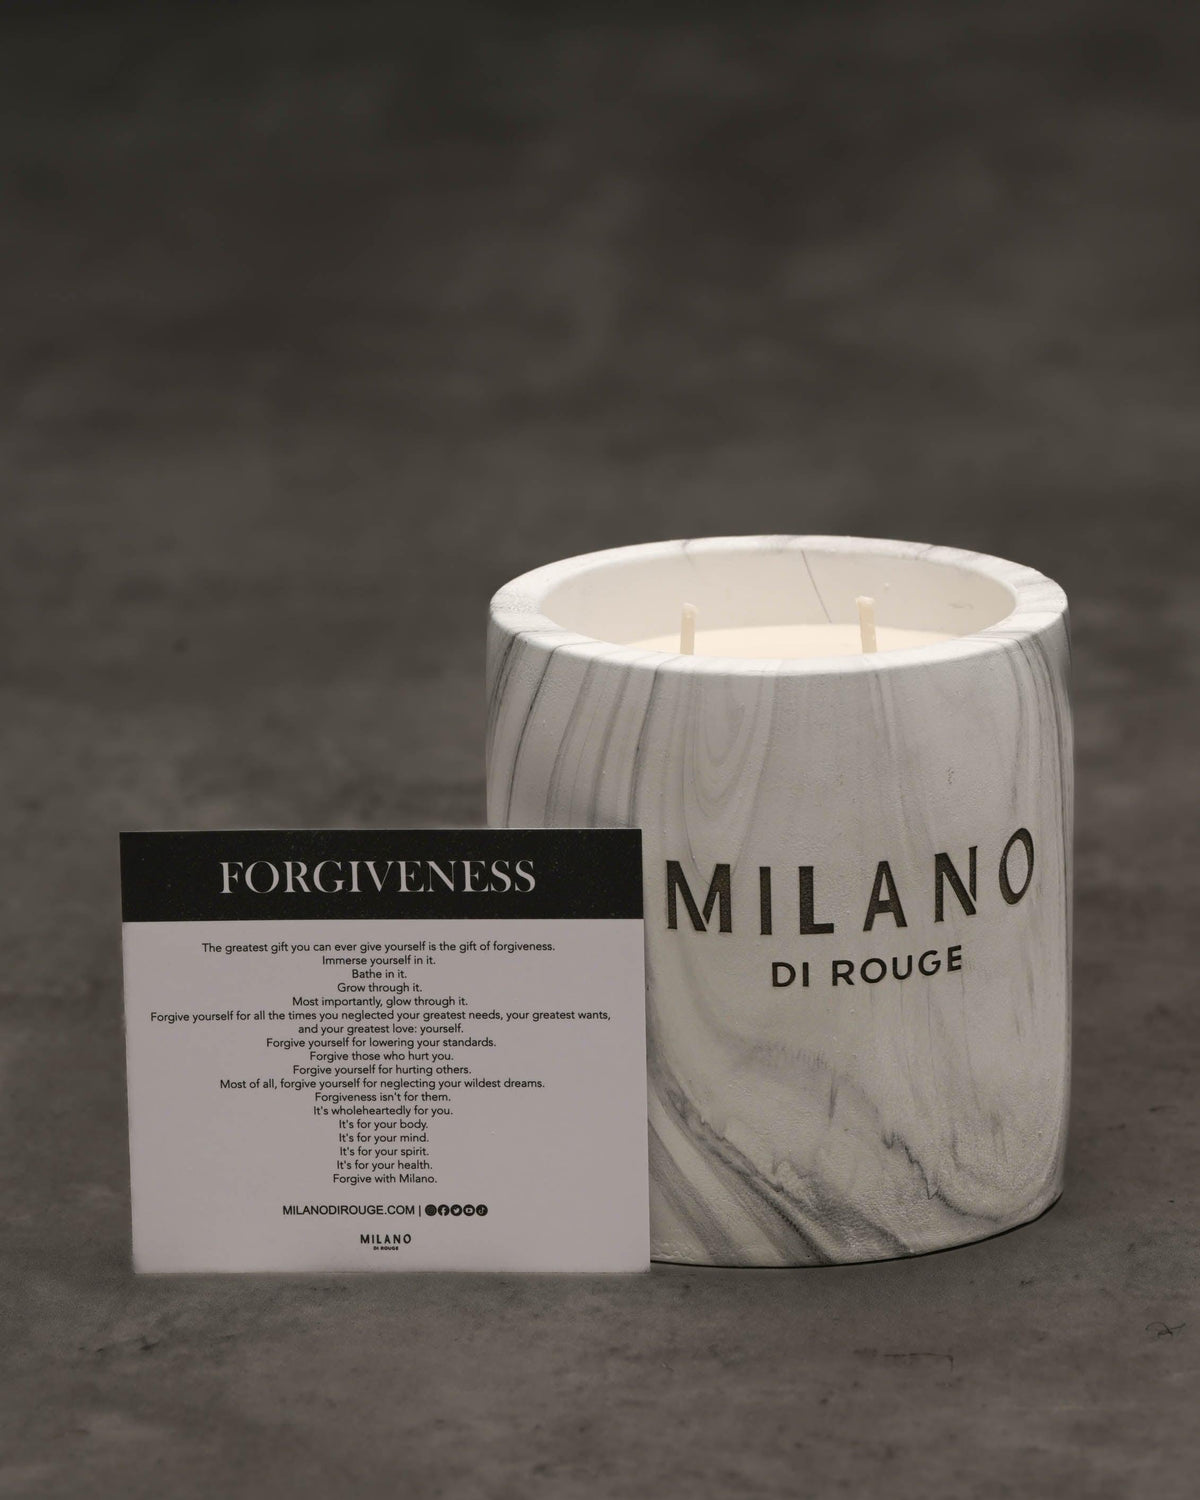 Milano Forgiveness Candle - Milano Di Rouge